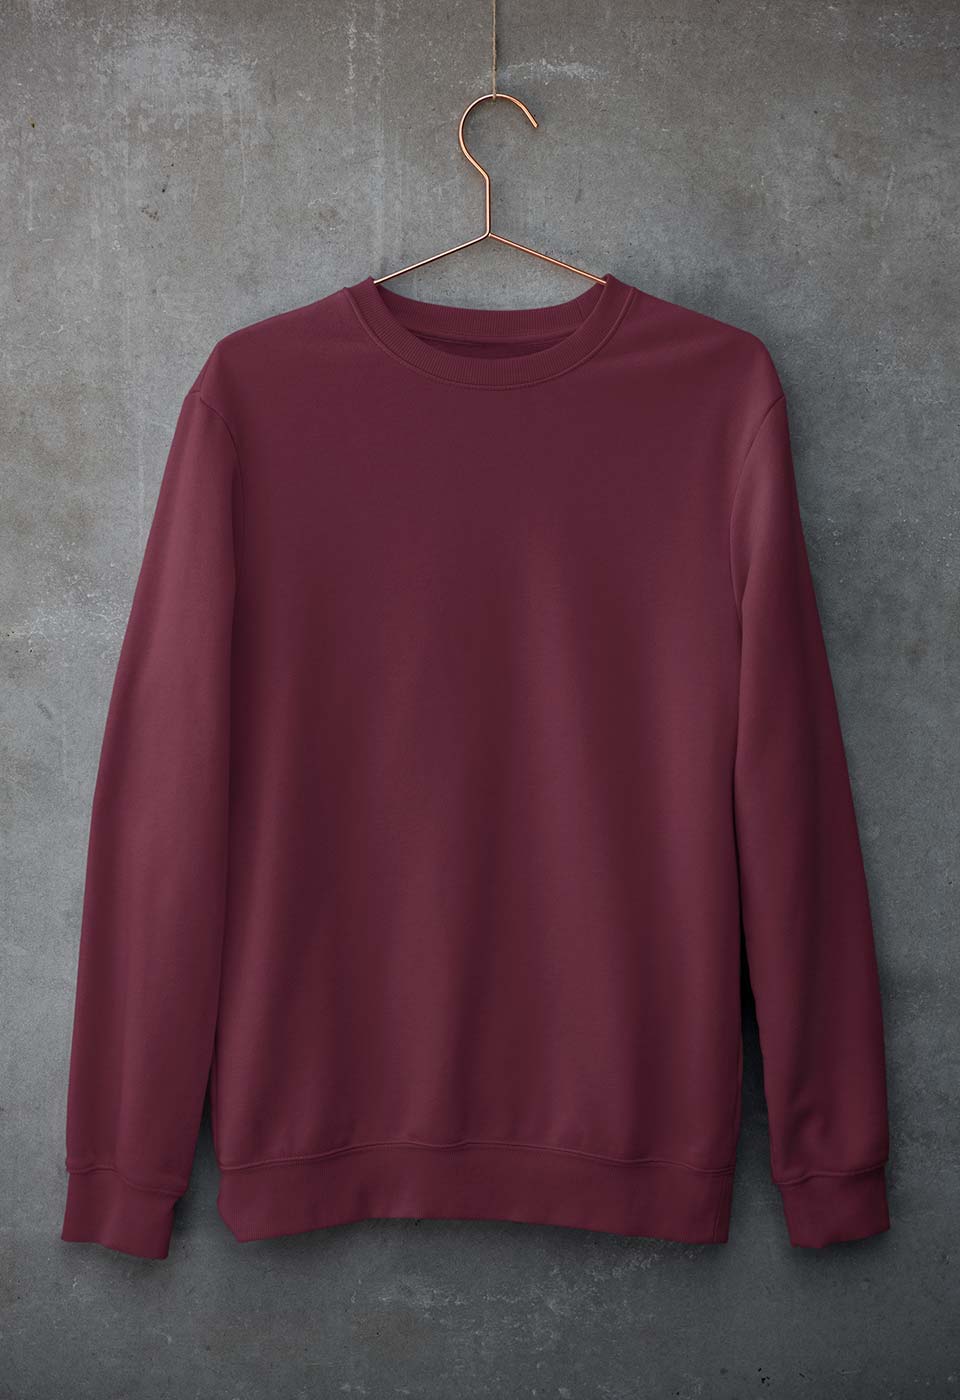 Sweatshirts : Unisex Plain & Solid Crew Neck (Multiple Colors and Sizes)